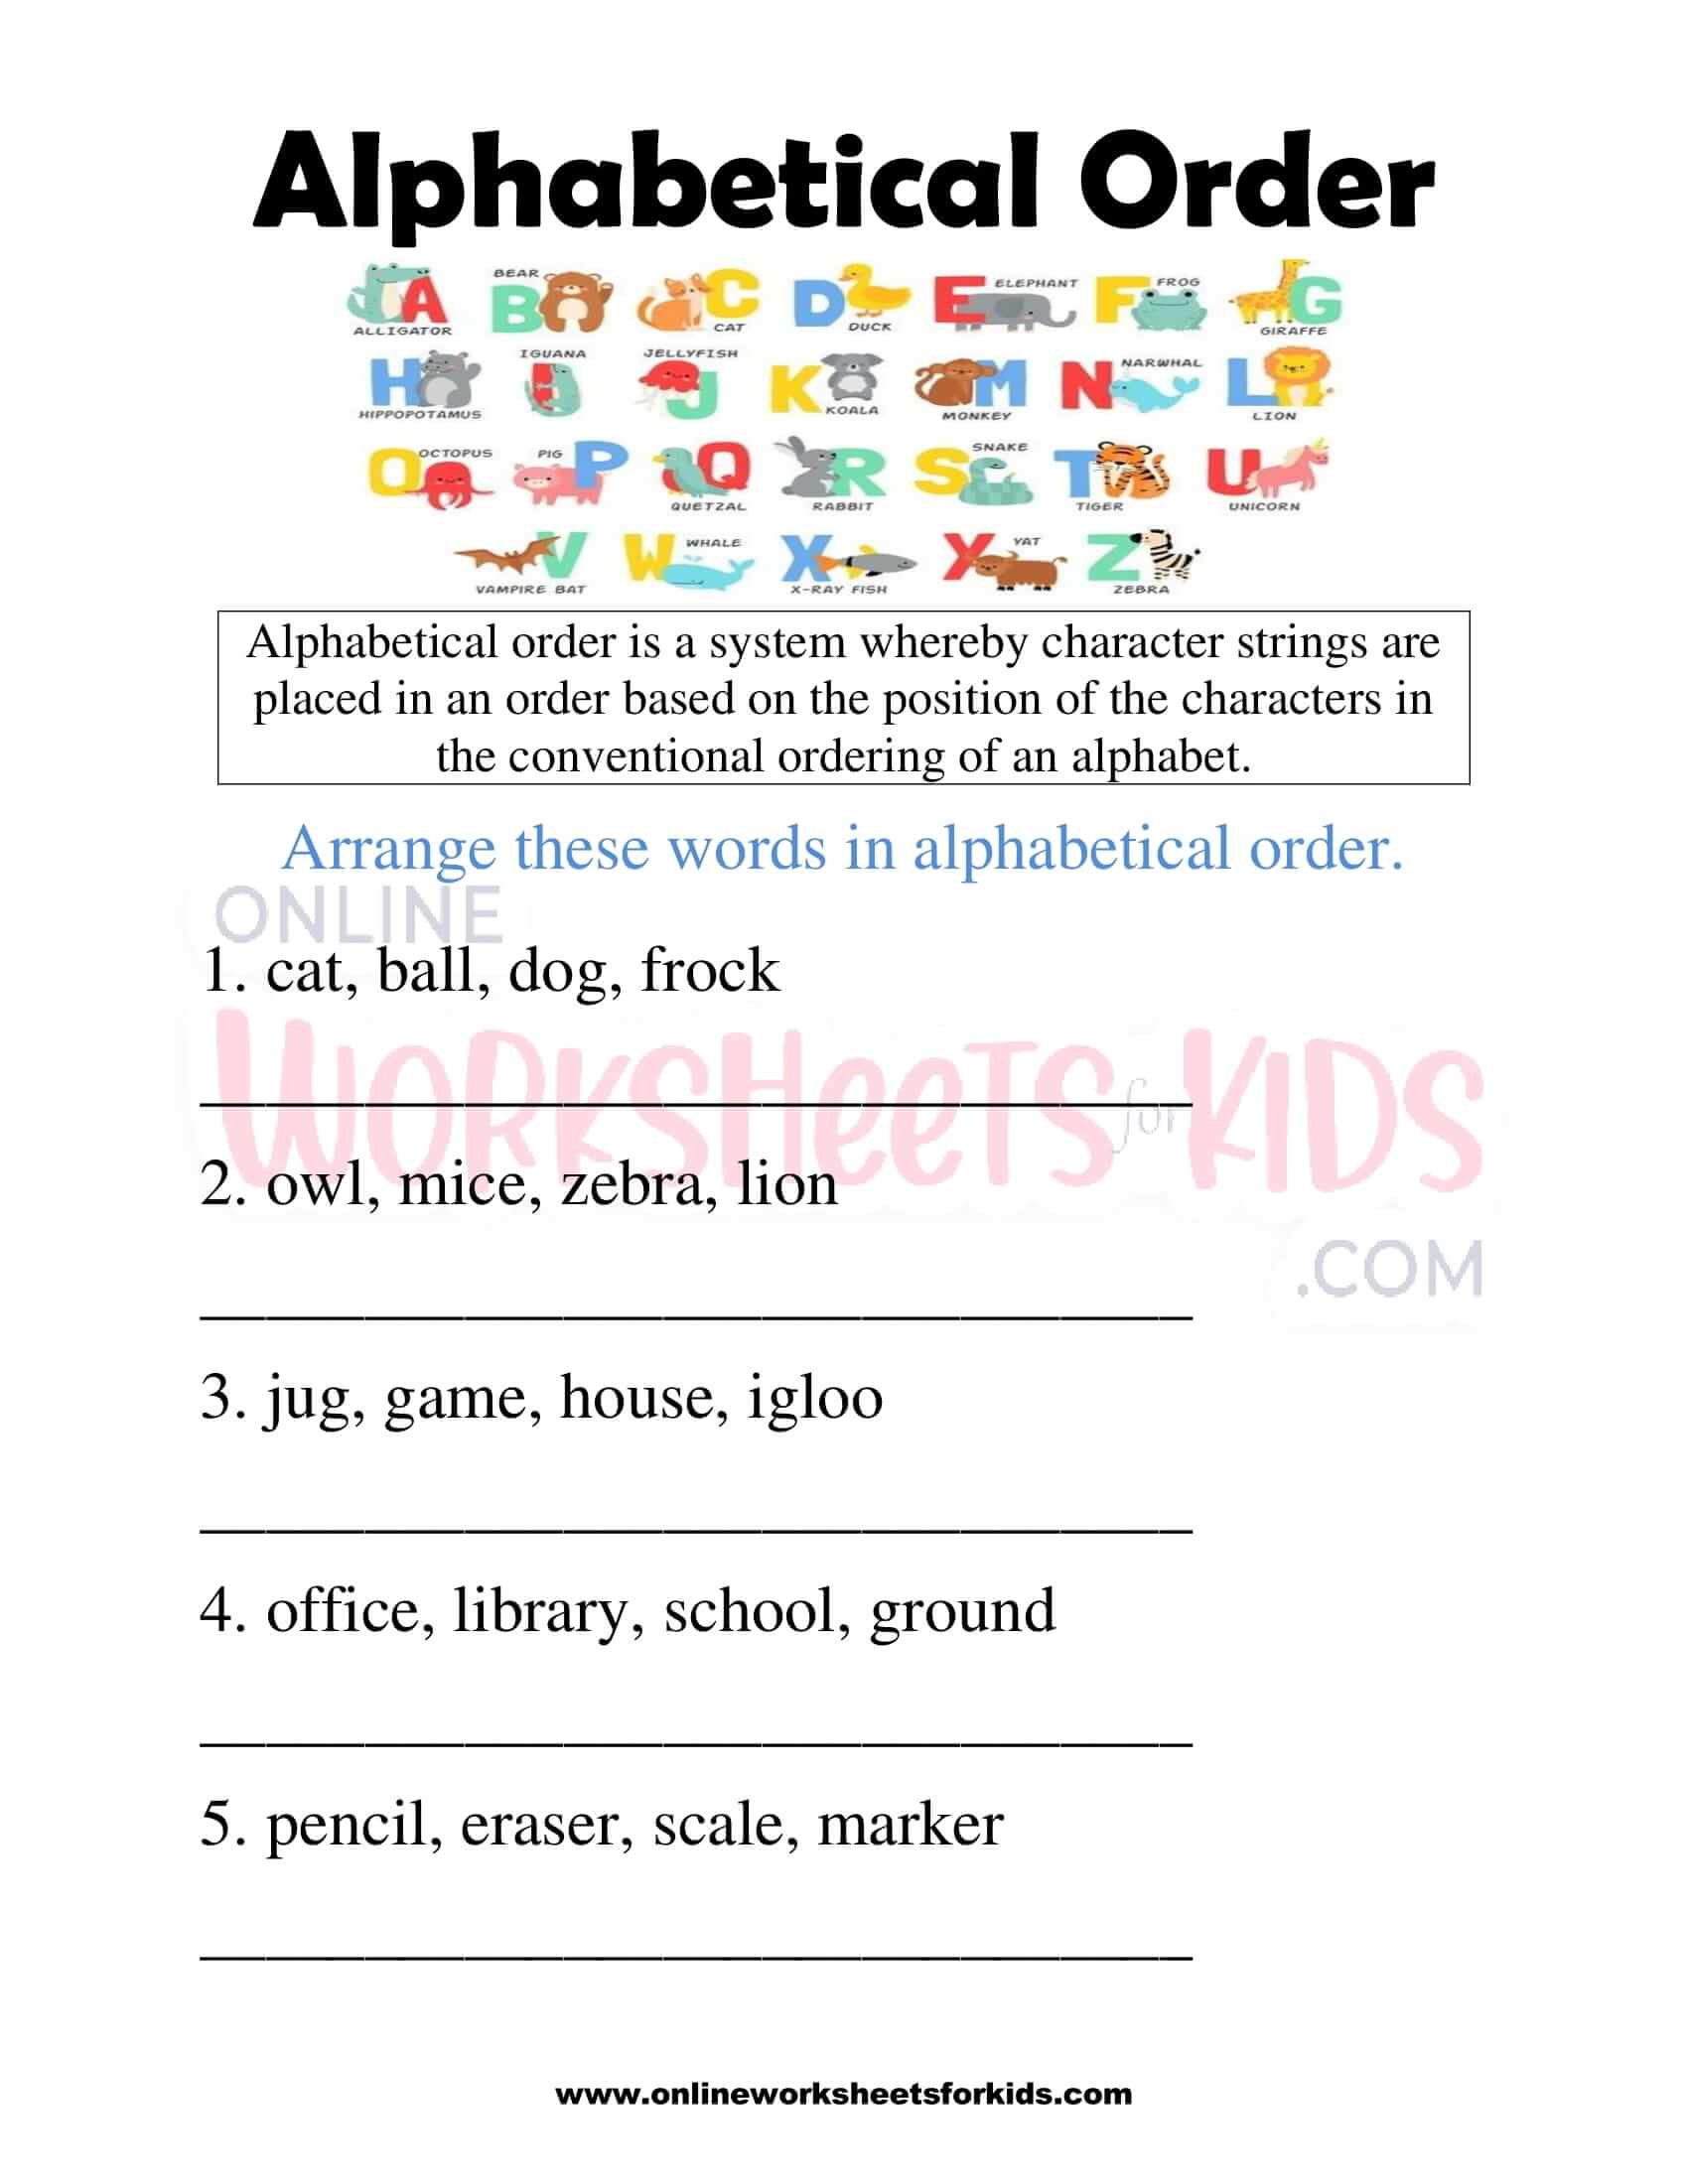 Alphabetical Order Free Printable Worksheets 8th Grade Level